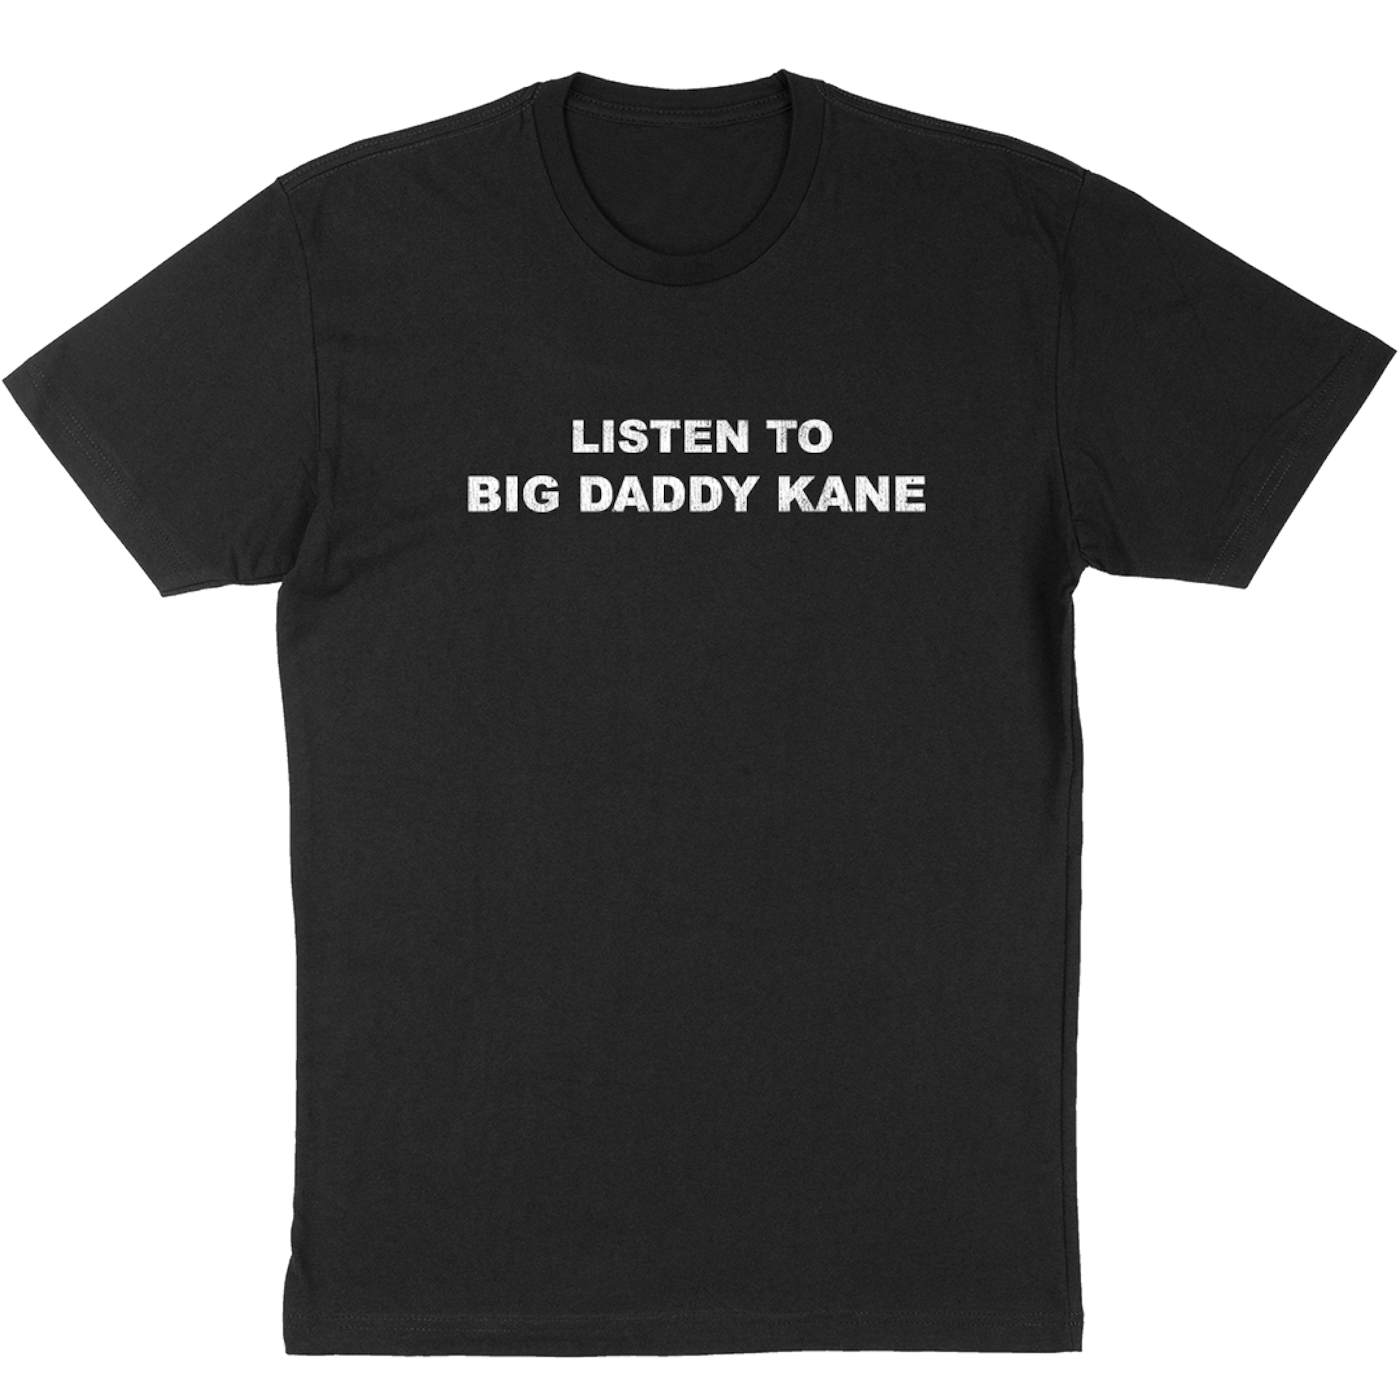 Big Daddy Kane "Listen To" T-Shirt